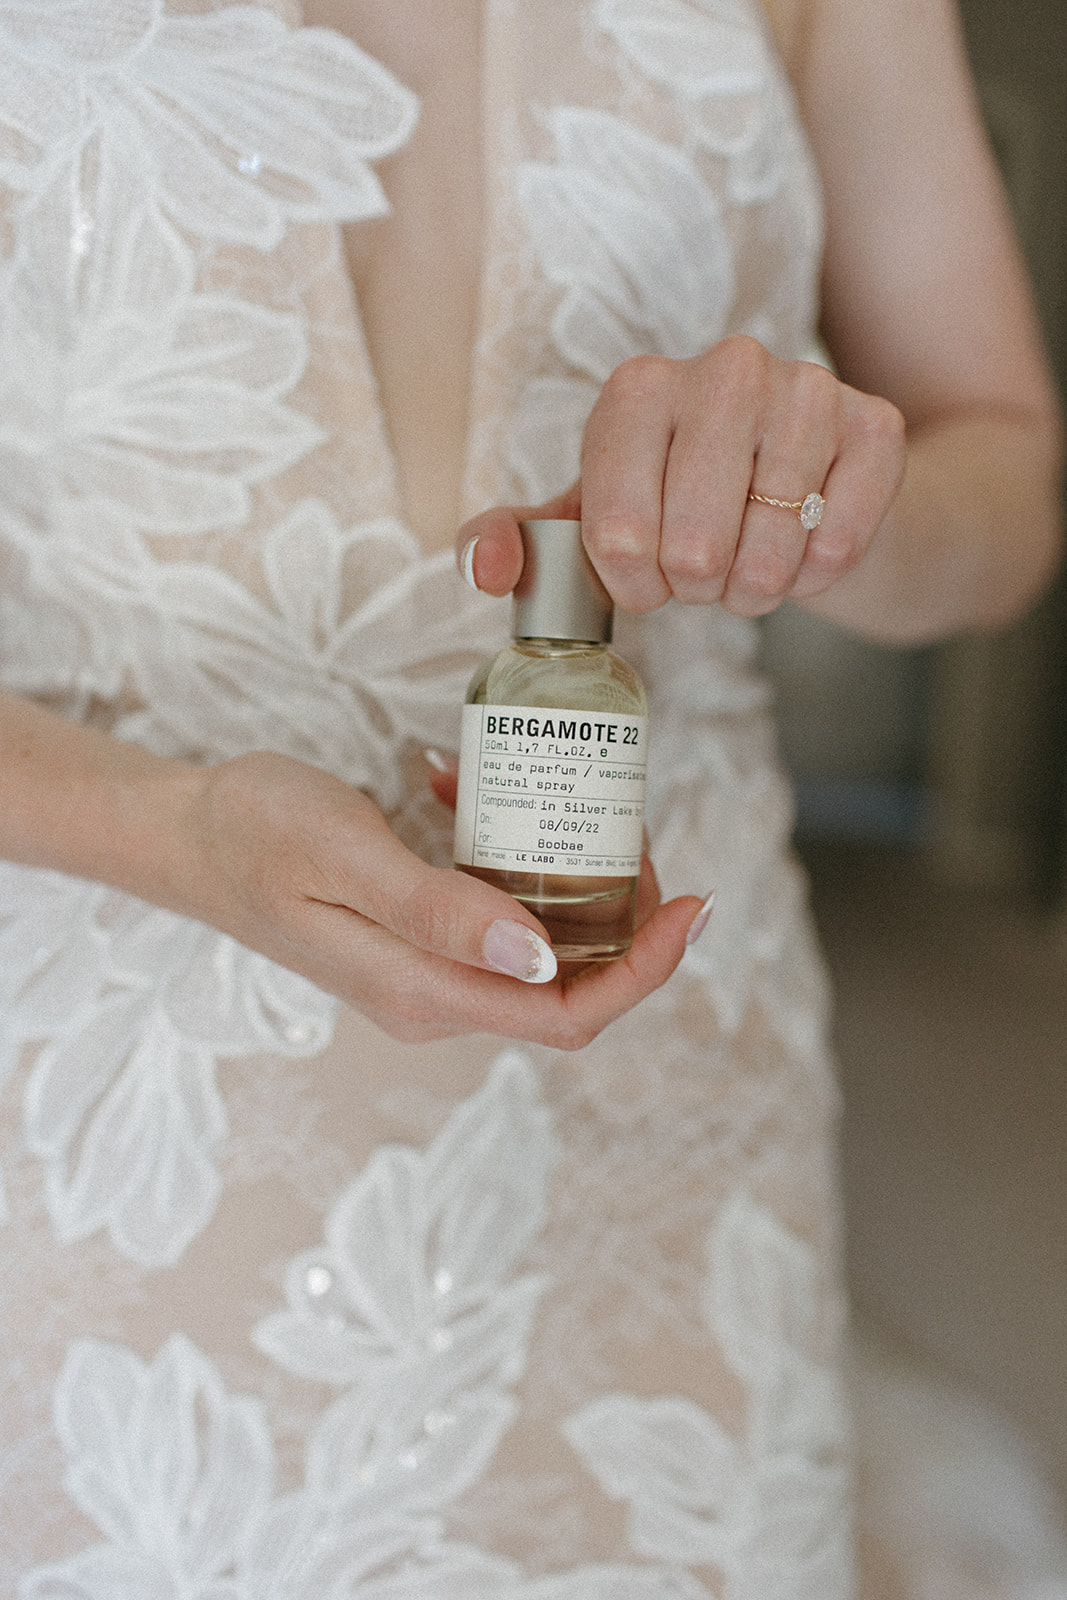 bride with oval cut diamond wedding ring holding a bottle of bergamot 22 perfume 